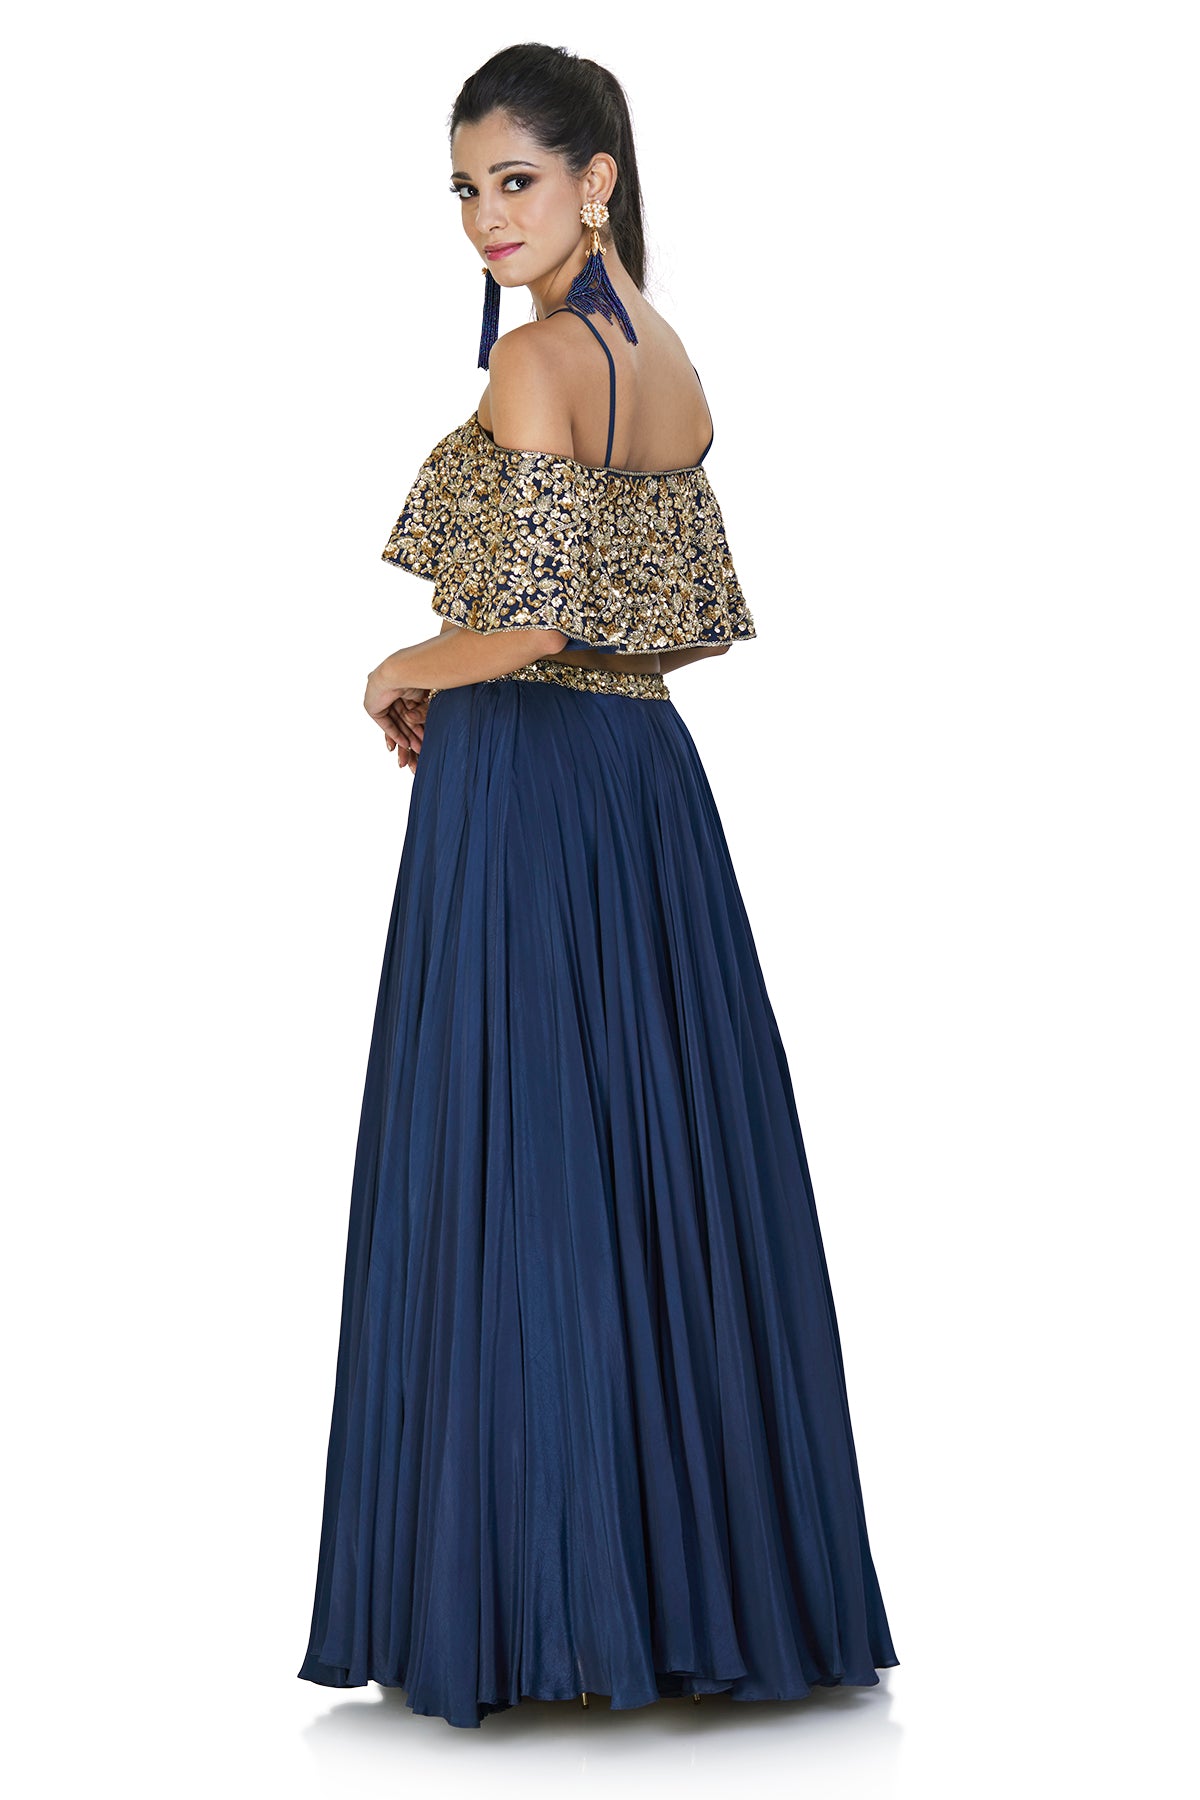 Embellished navy blue crop top and skirt